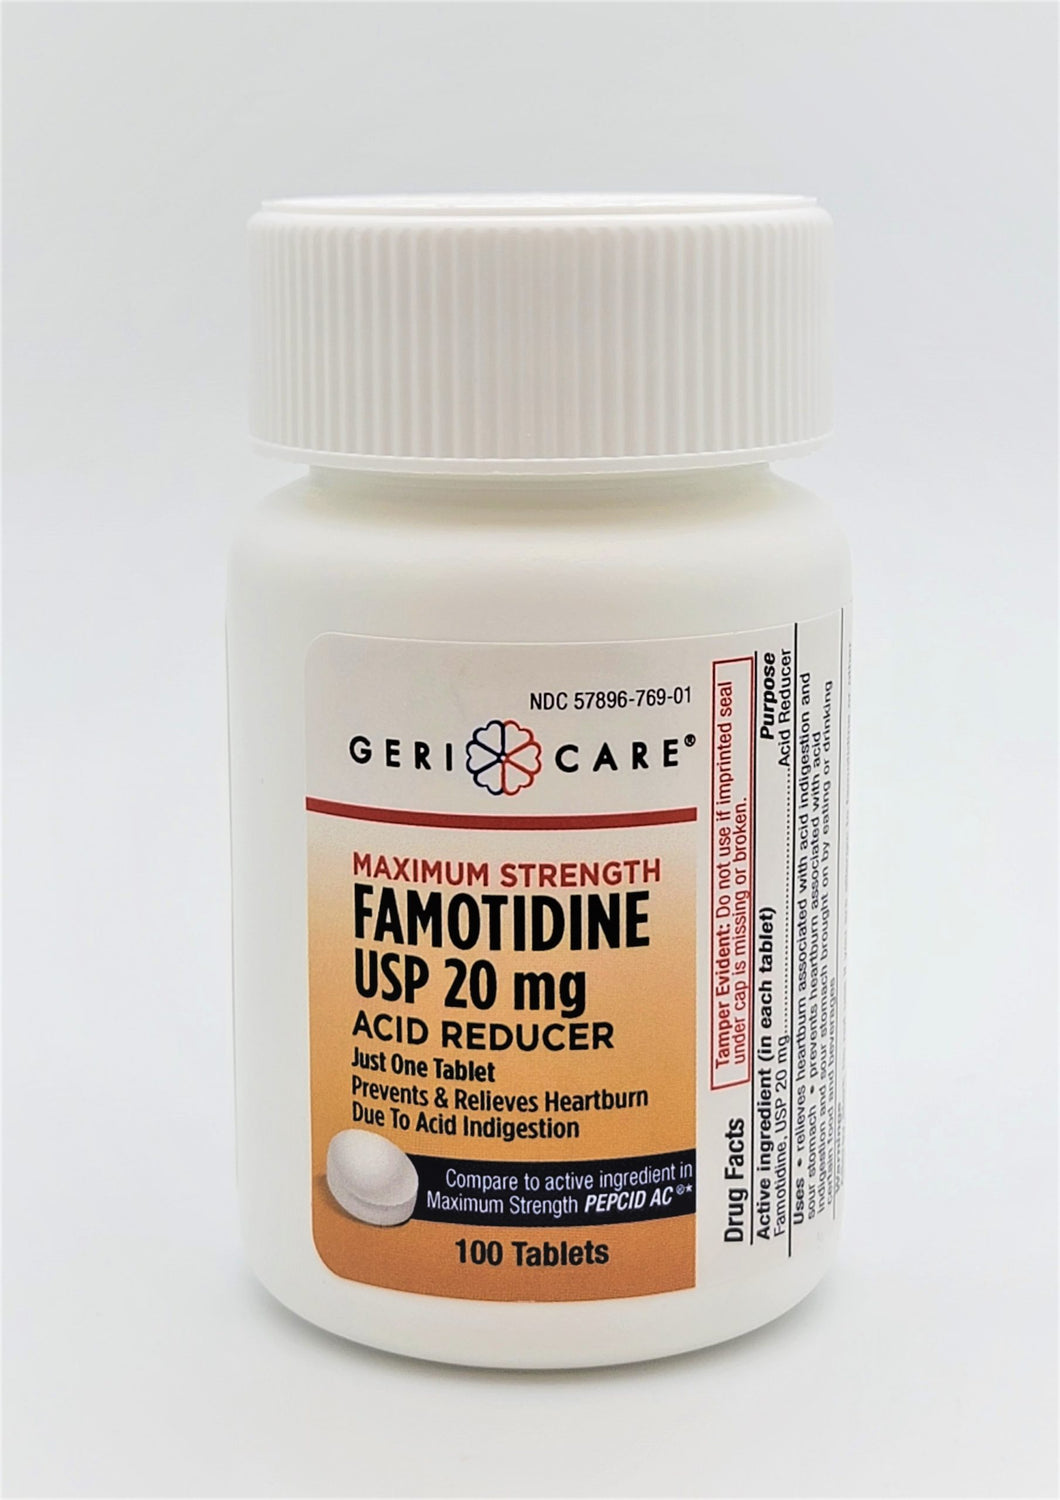 Famotidine, USP 20 mg Acid Reducer for Heartburn Relief, 100 Count Tablets